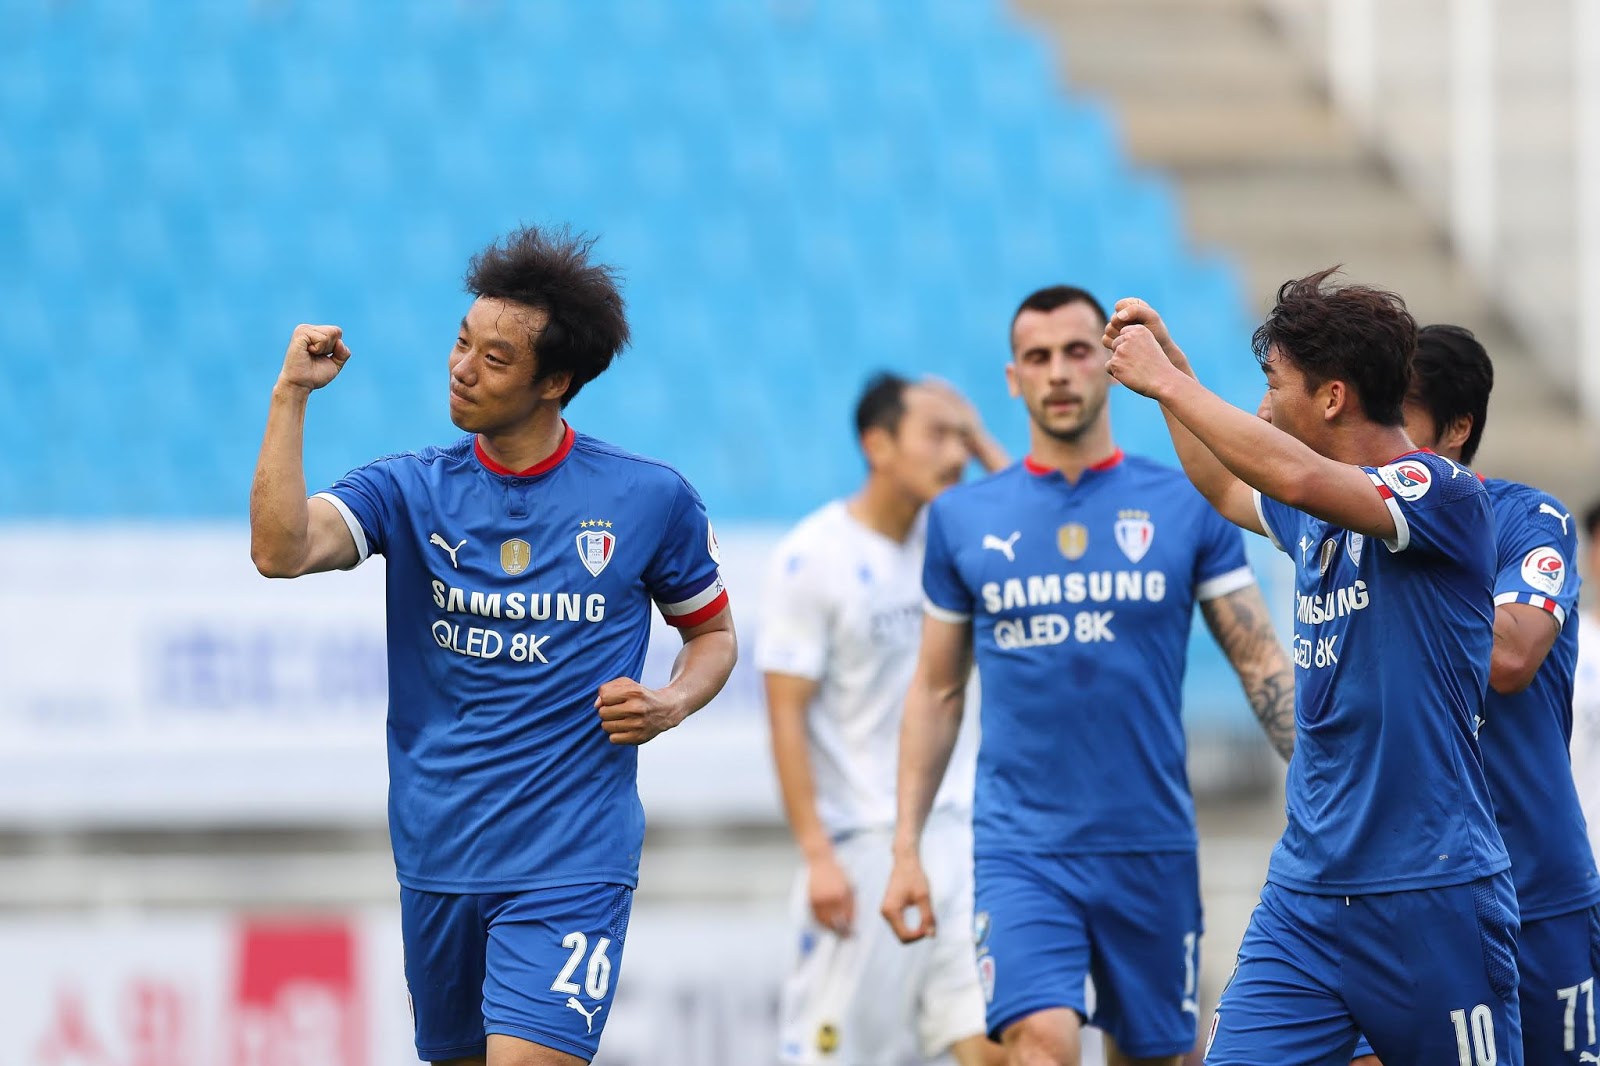 Soi kèo Suwon Samsung Bluewings vs FC Seoul